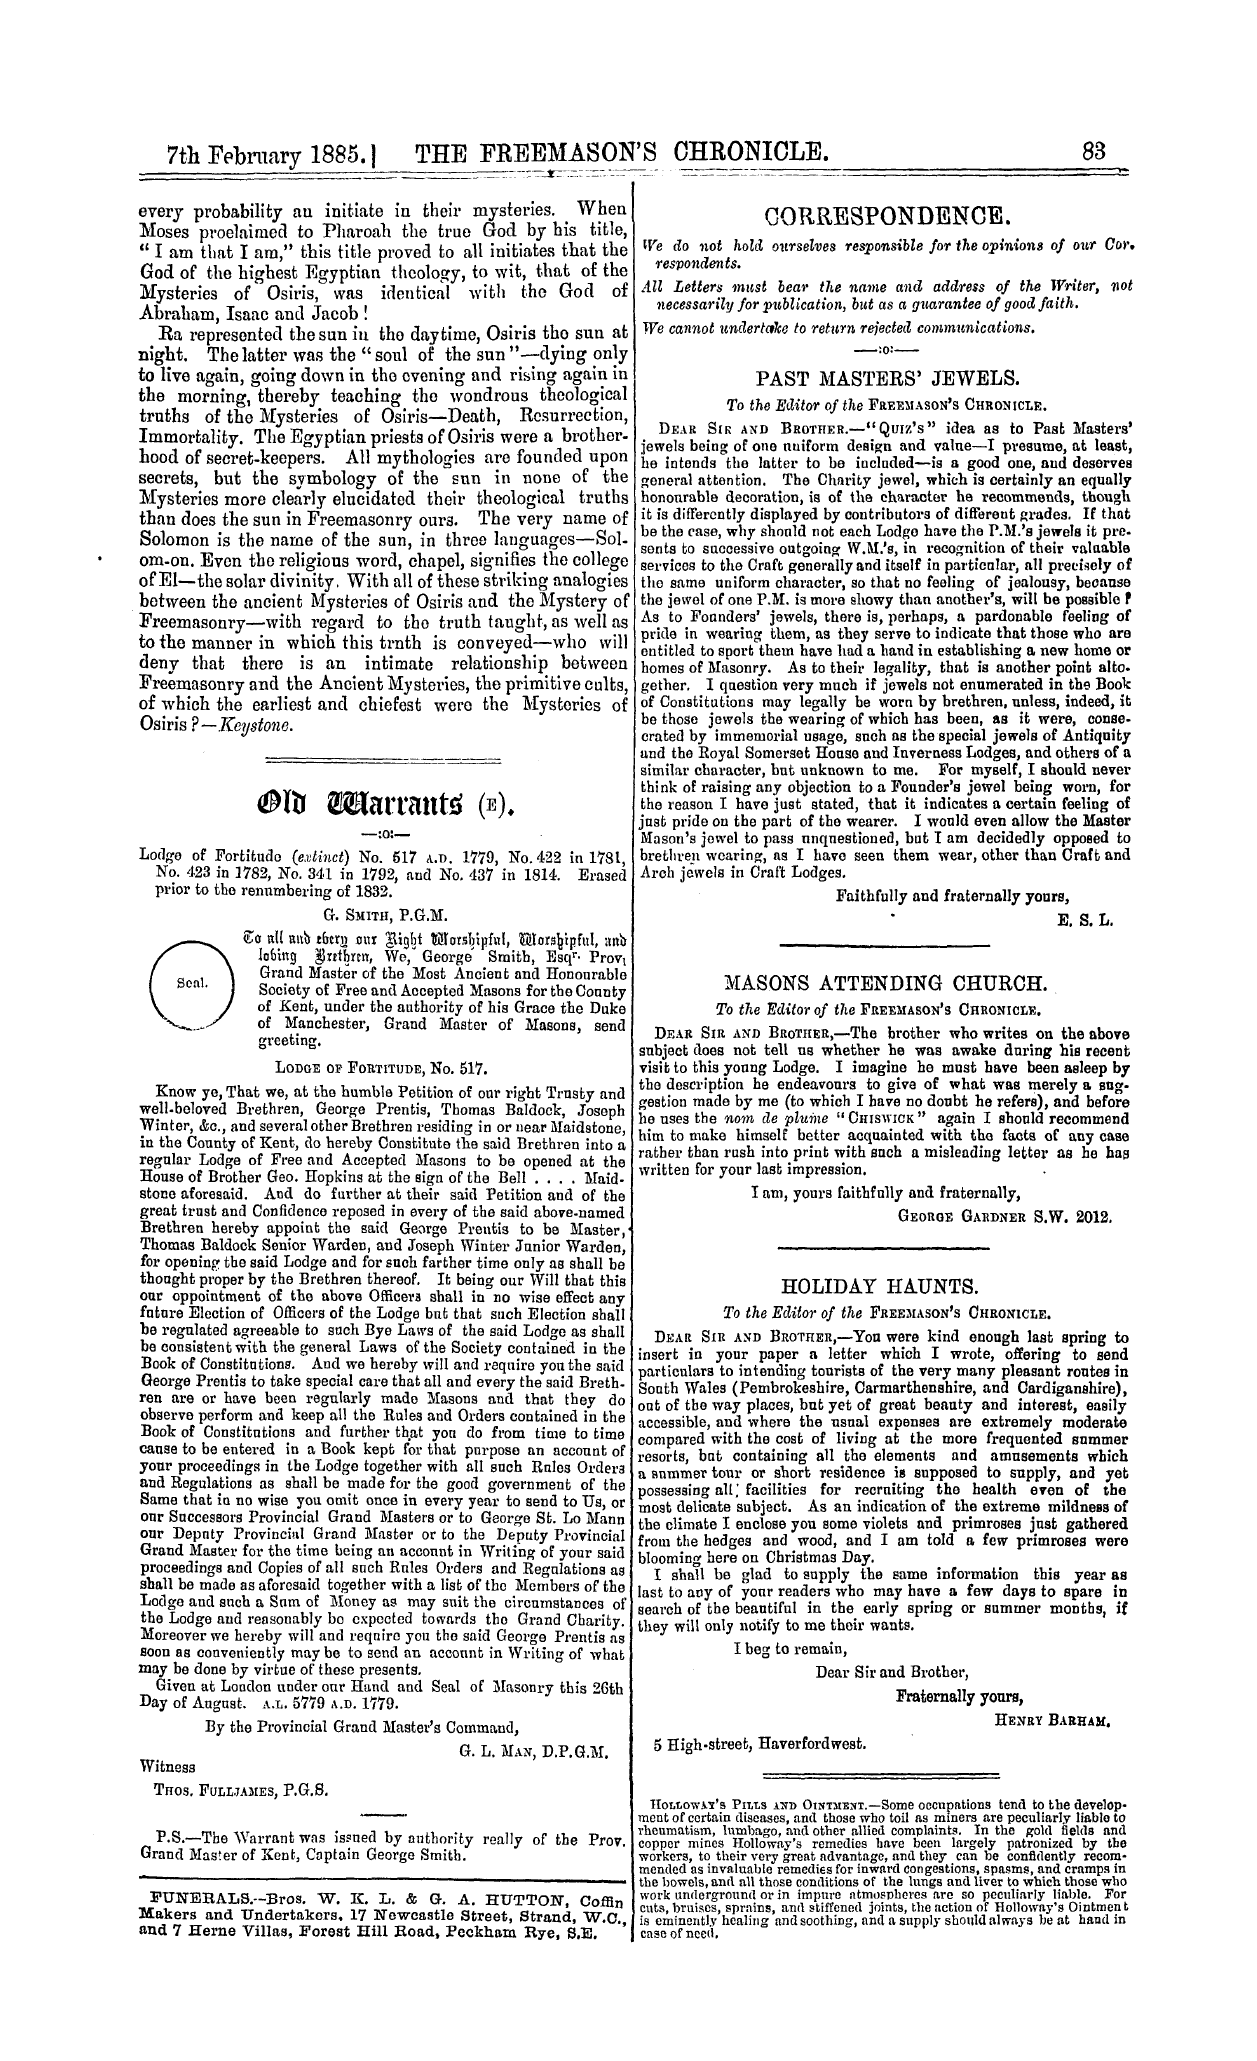 The Freemason's Chronicle: 1885-02-07 - Old Warrants (E).